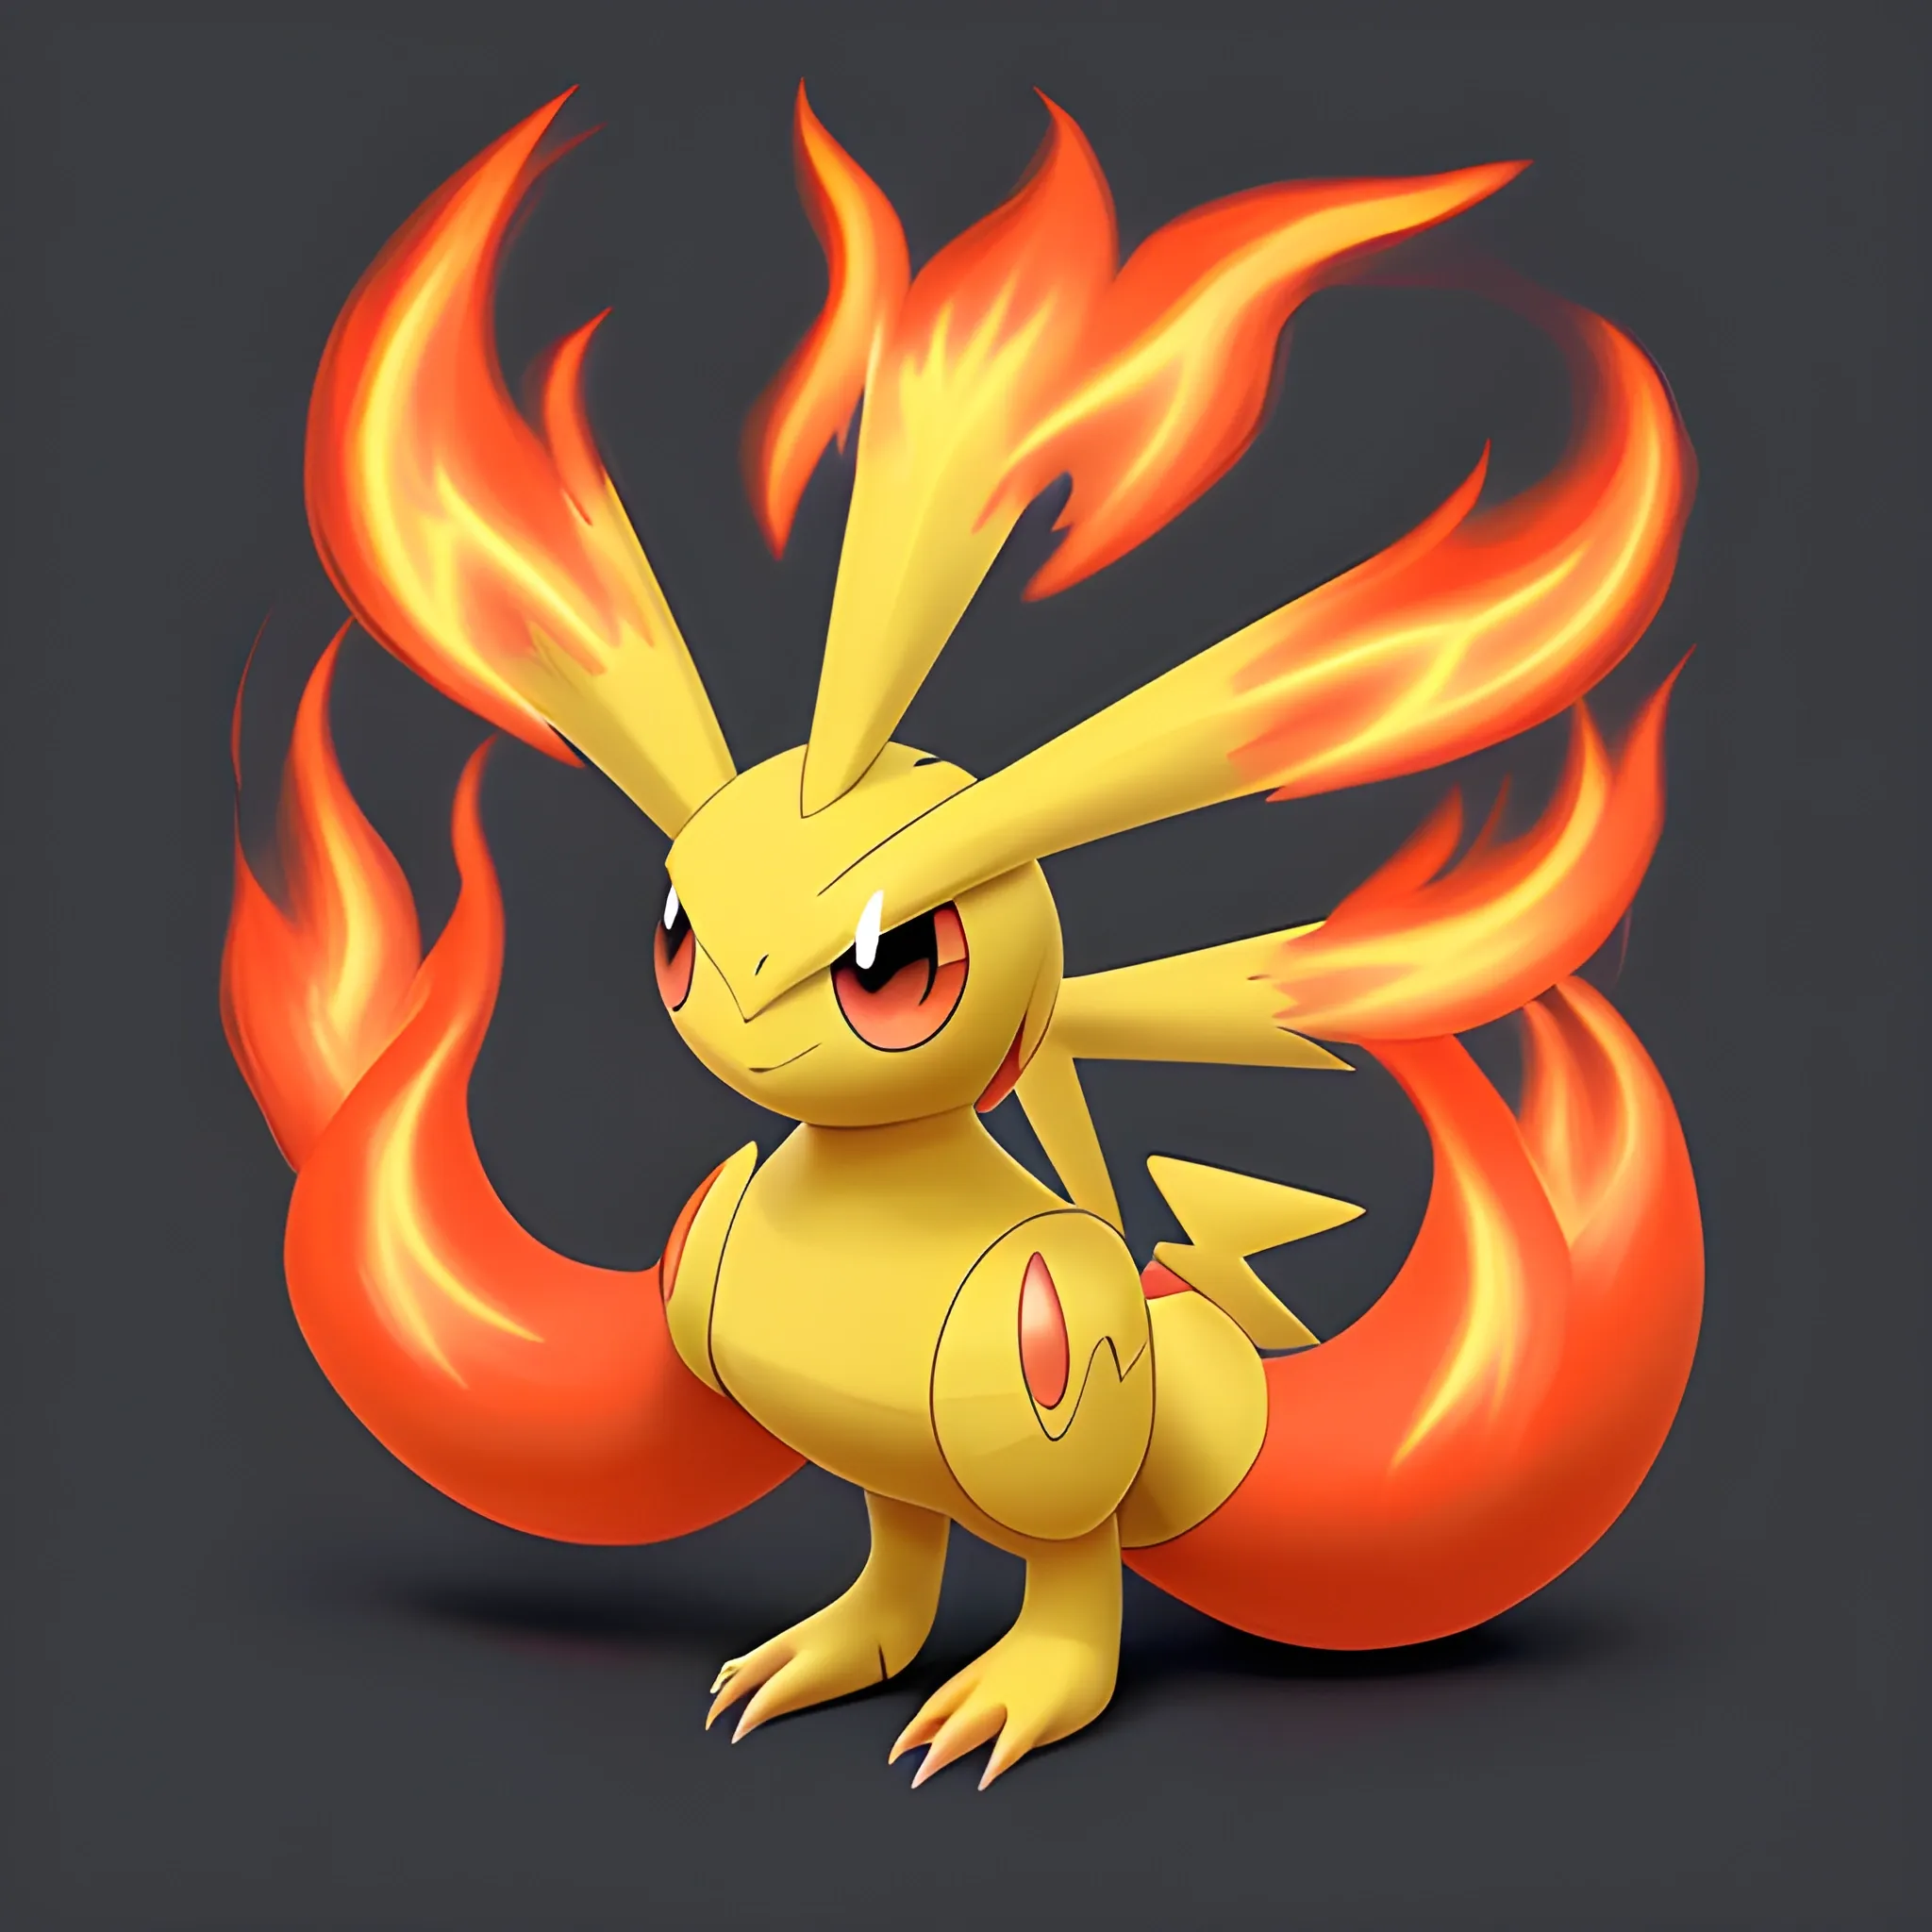 a fire tipe pokemon based on the idea of volta album by björk 